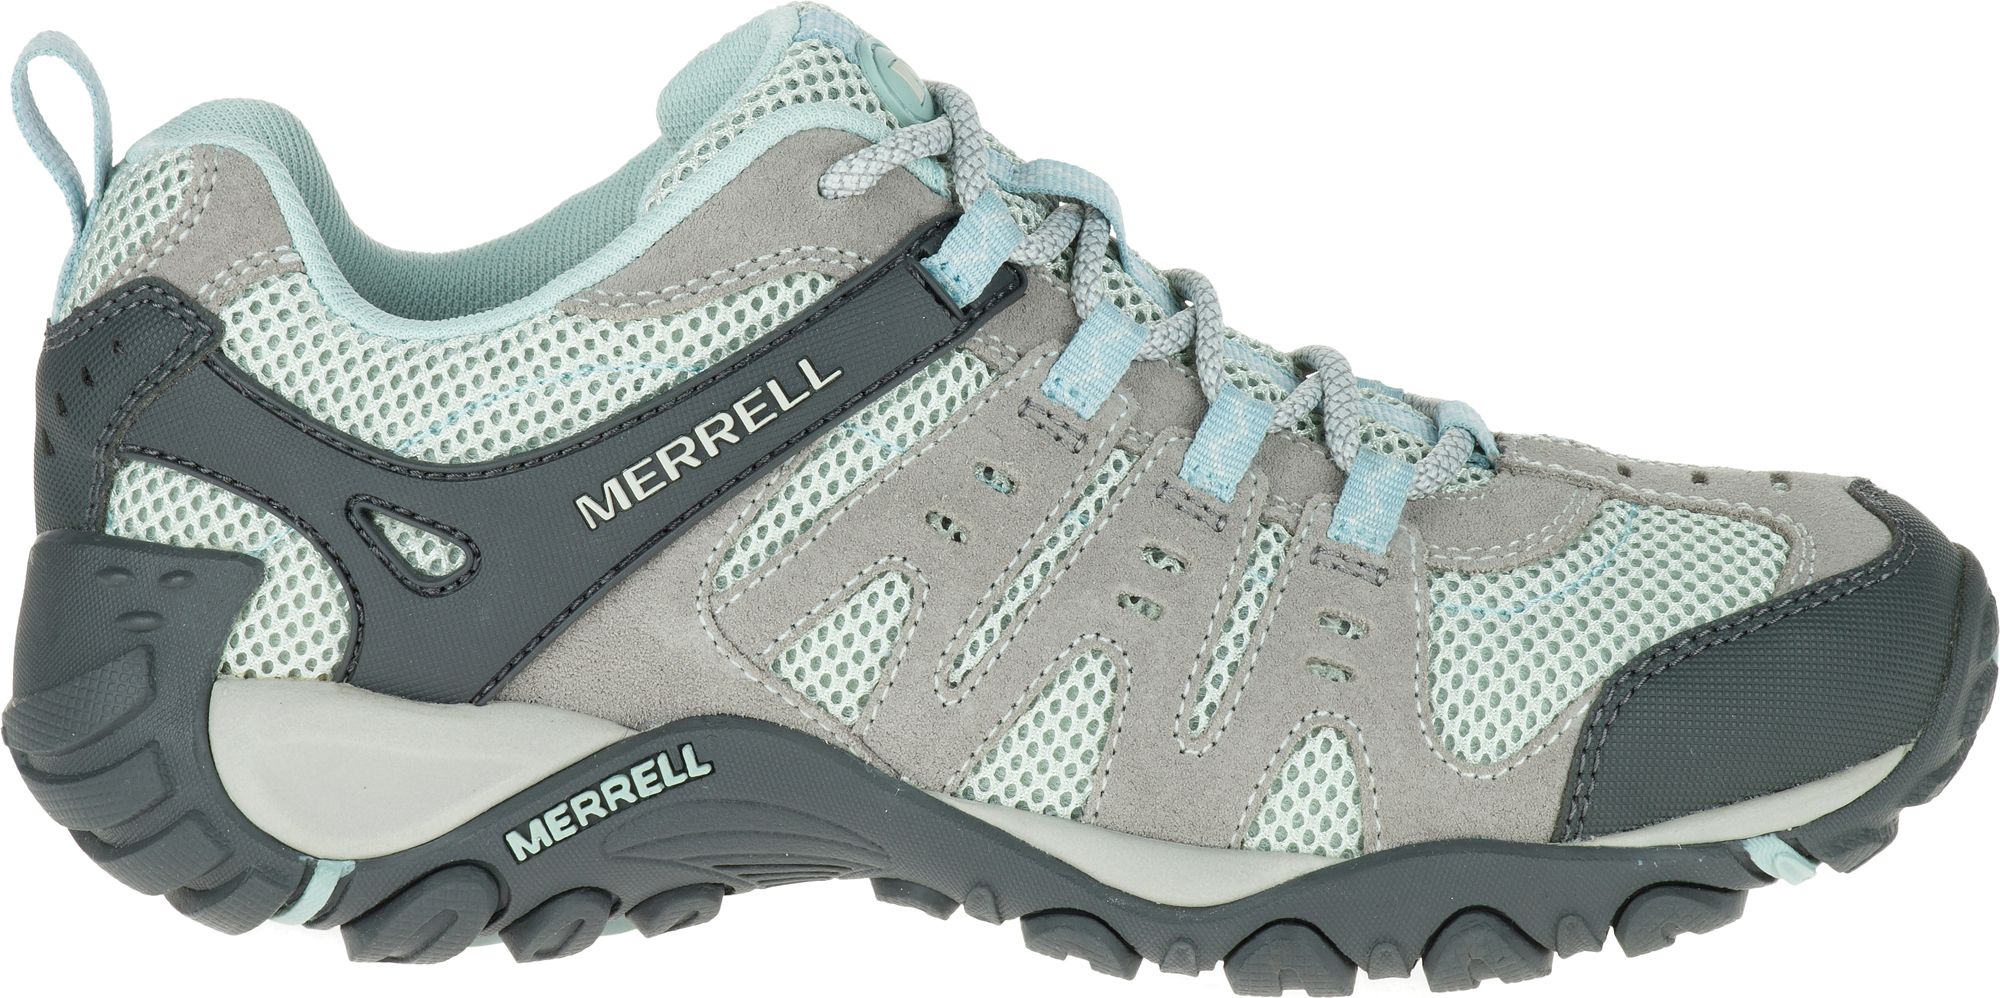 merrell ladies tennis shoes